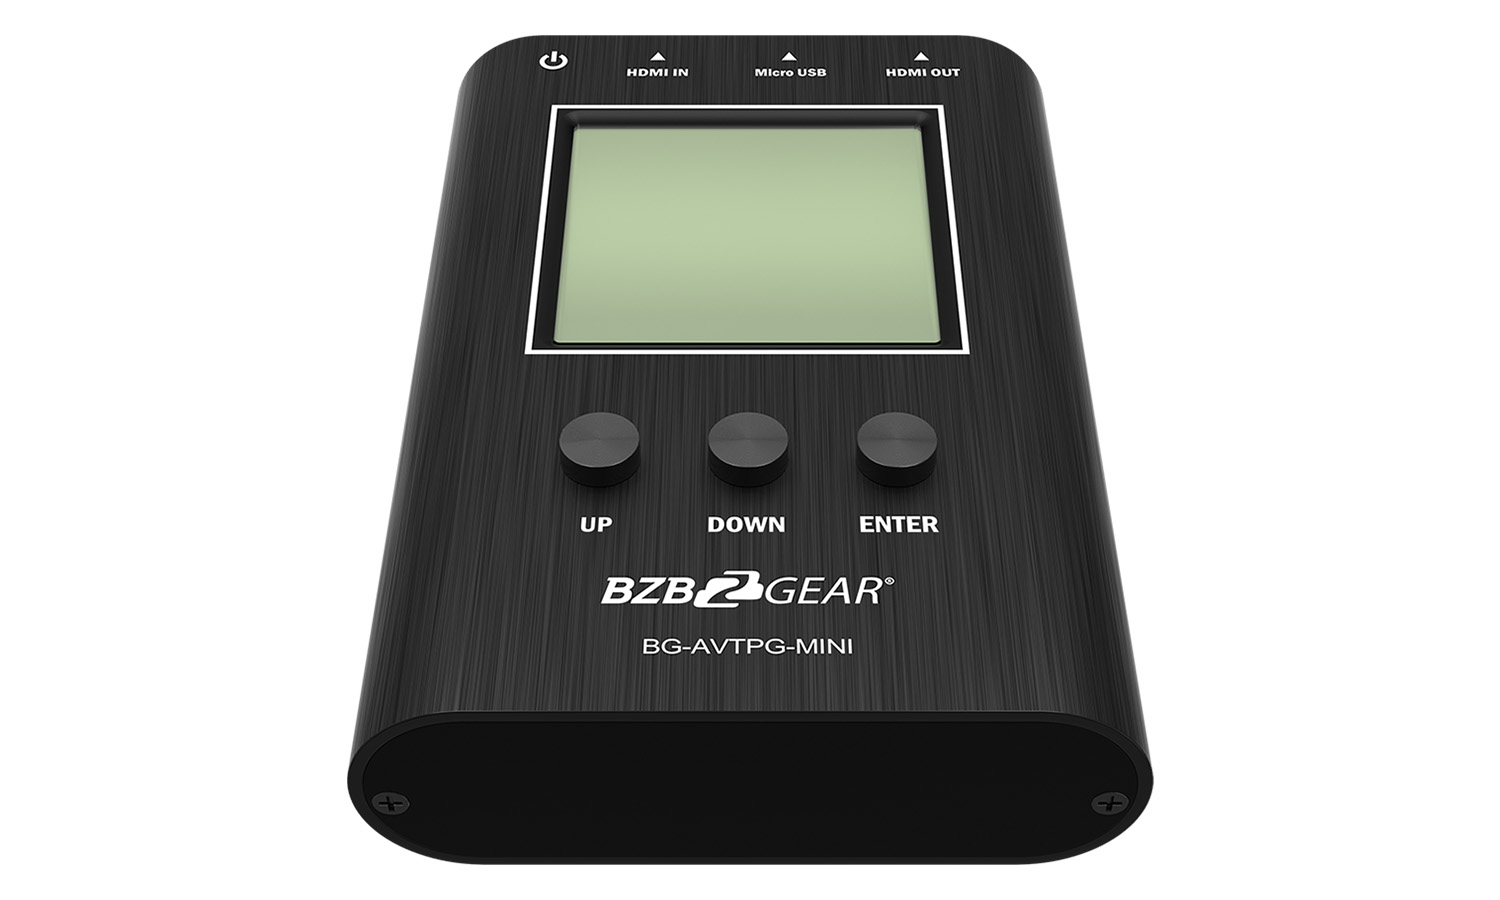 BG-AVTPG-MINI 1080P FHD/4K UHD HDMI 2.0 18Gbps Portable Signal Test Generator and Analyzer by BZBGEAR